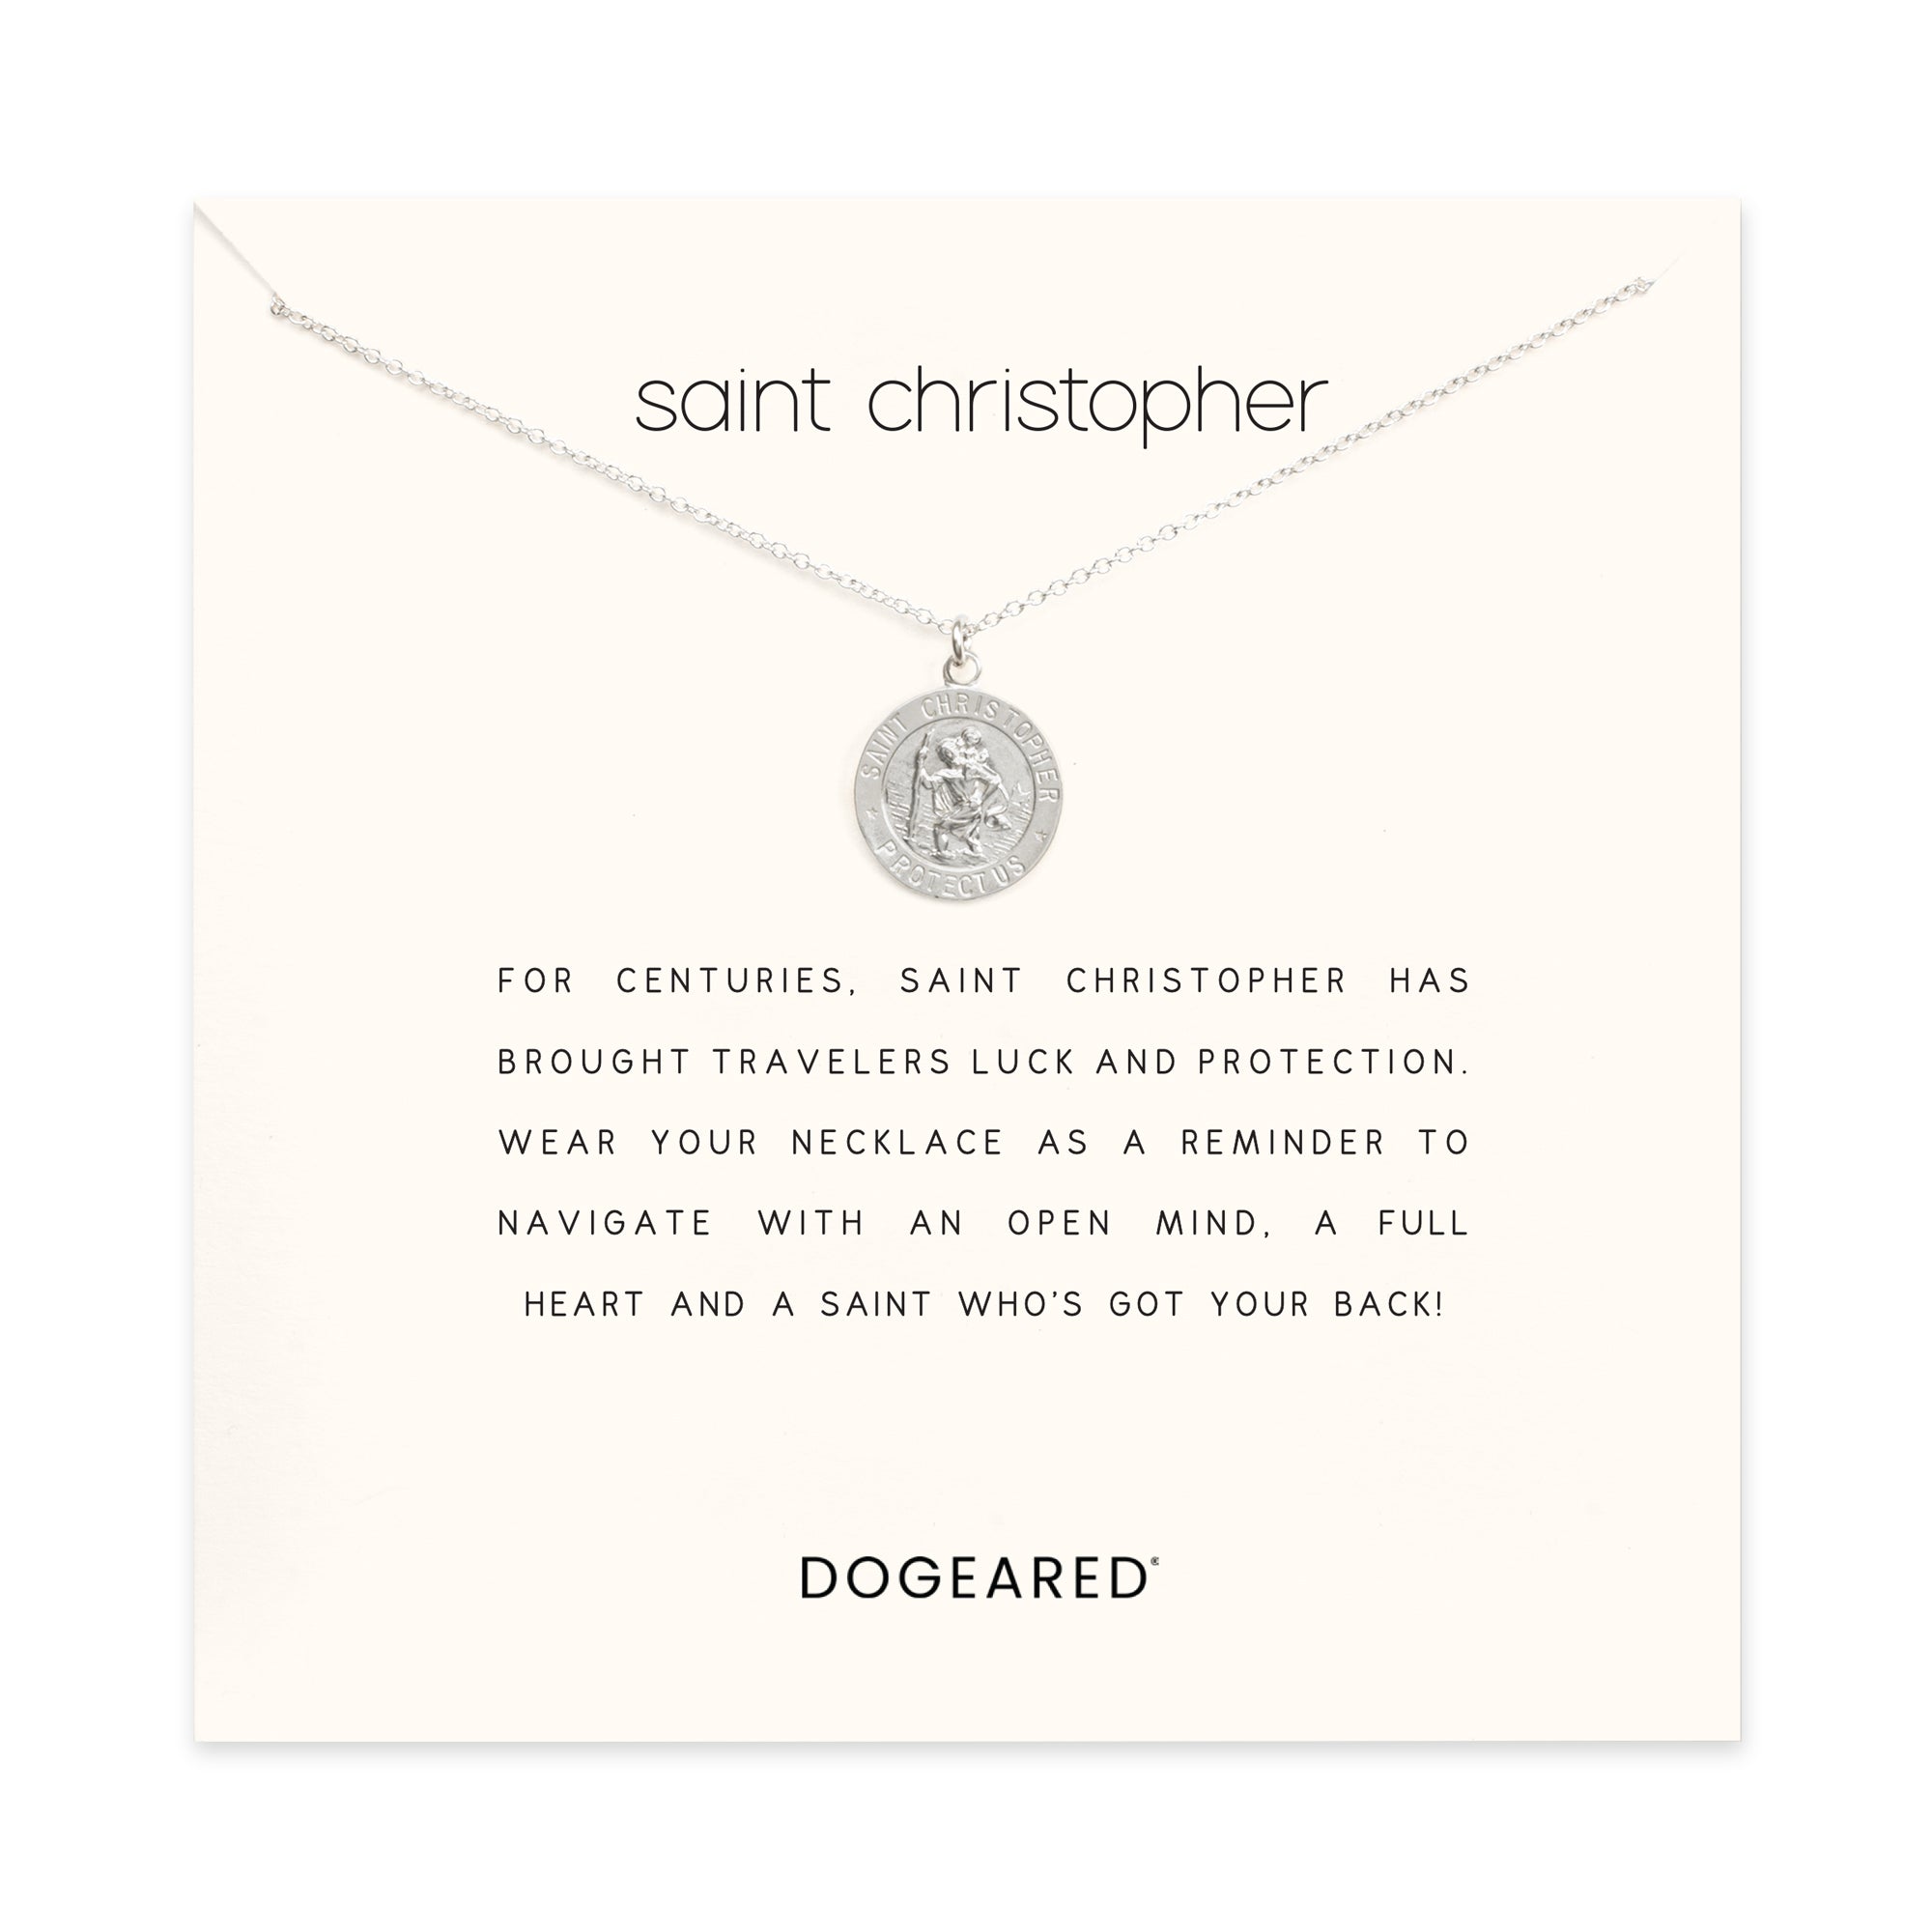 Saint christopher necklace - Dogeared